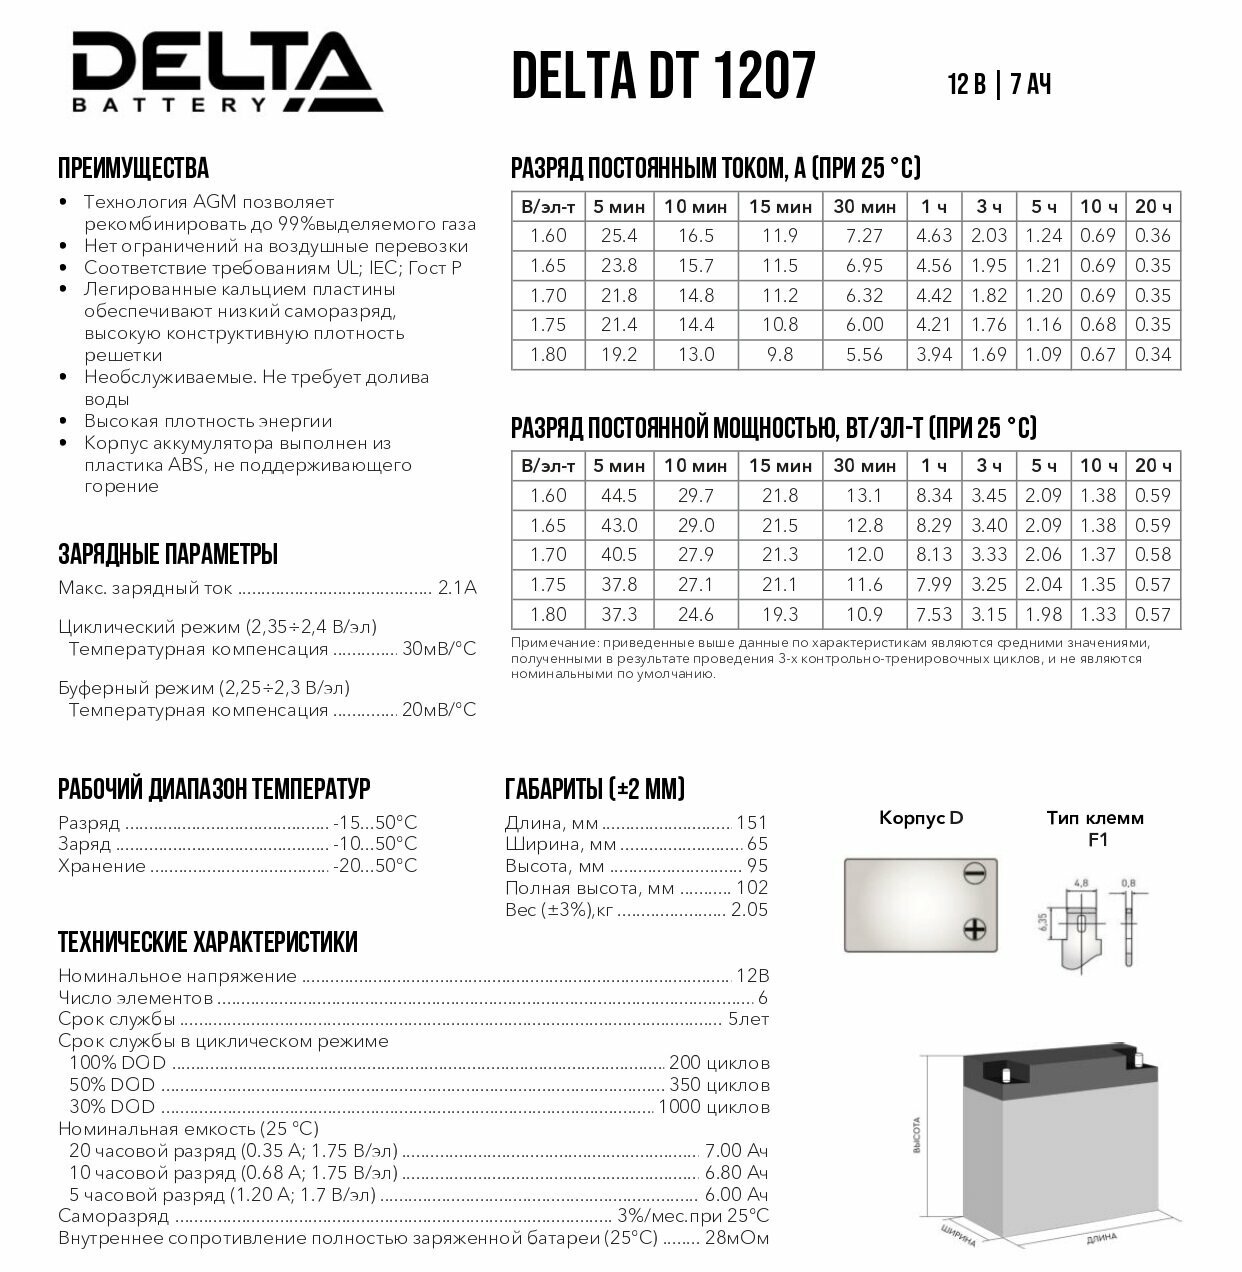 Аккумулятор Delta Battery DT 1207 для ИБП 12V 7Ah